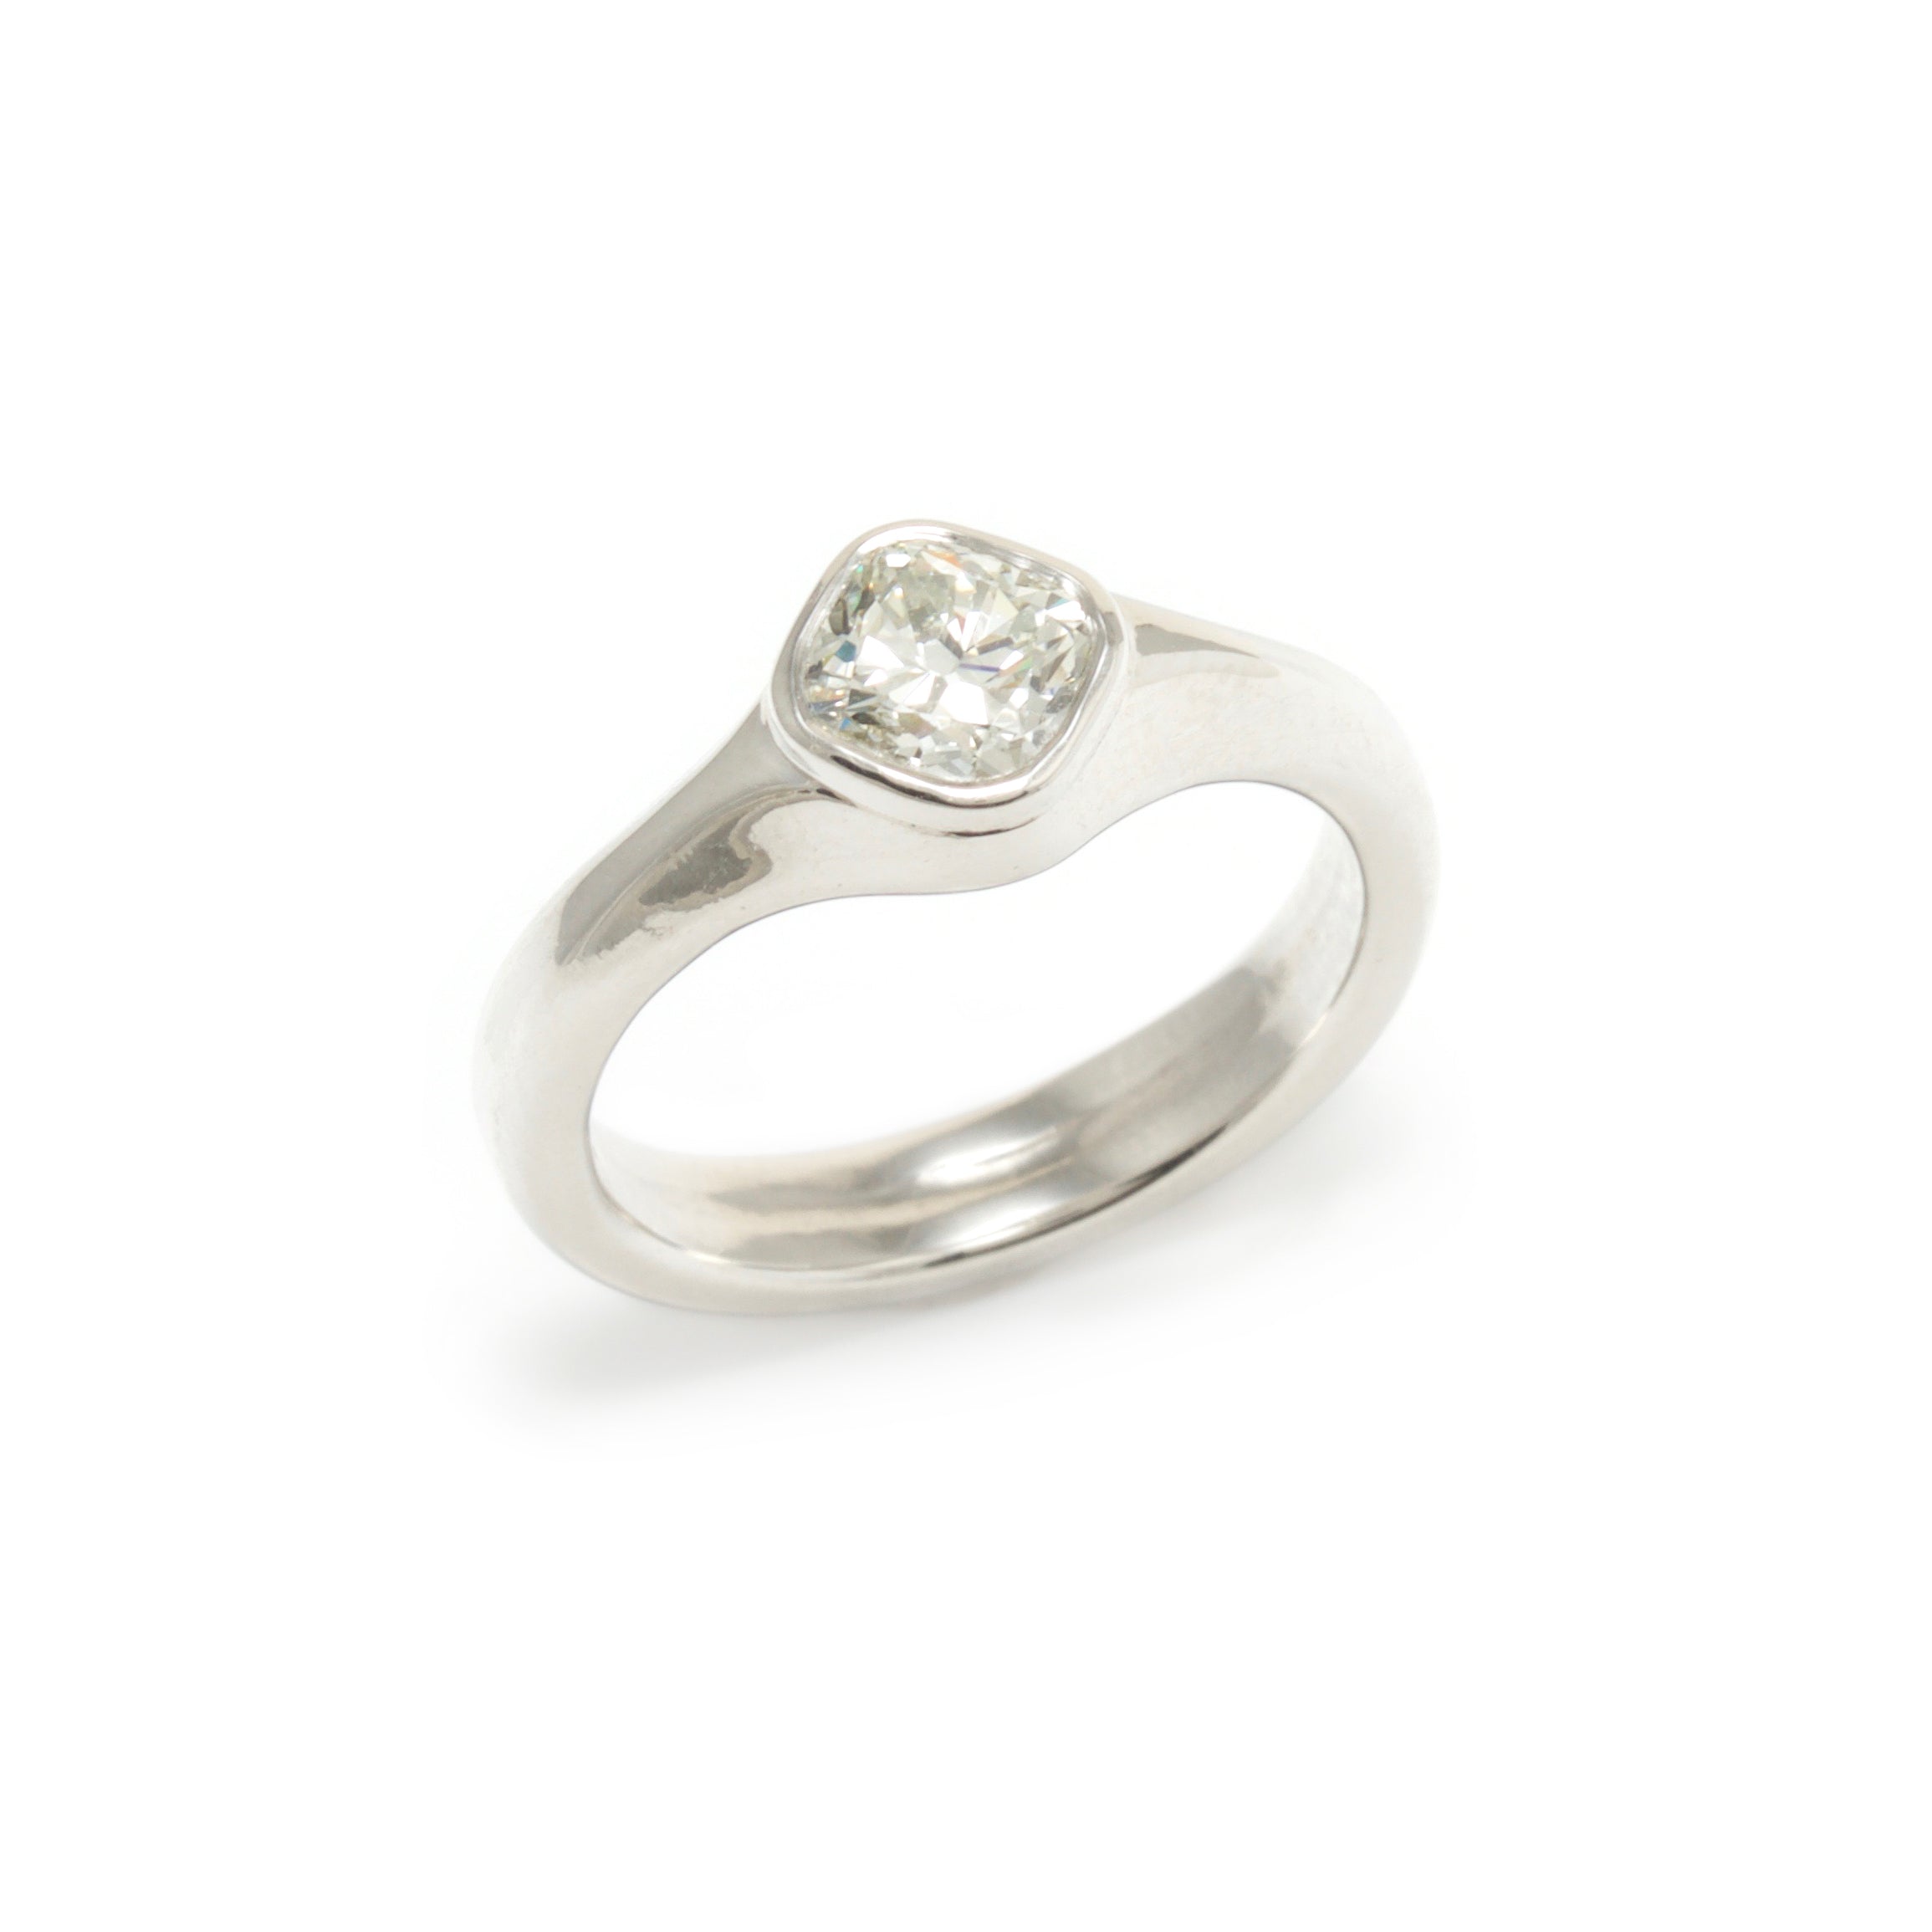 Carved Platinum Ring with Cushion Cut Diamond – Caleb Meyer Studio